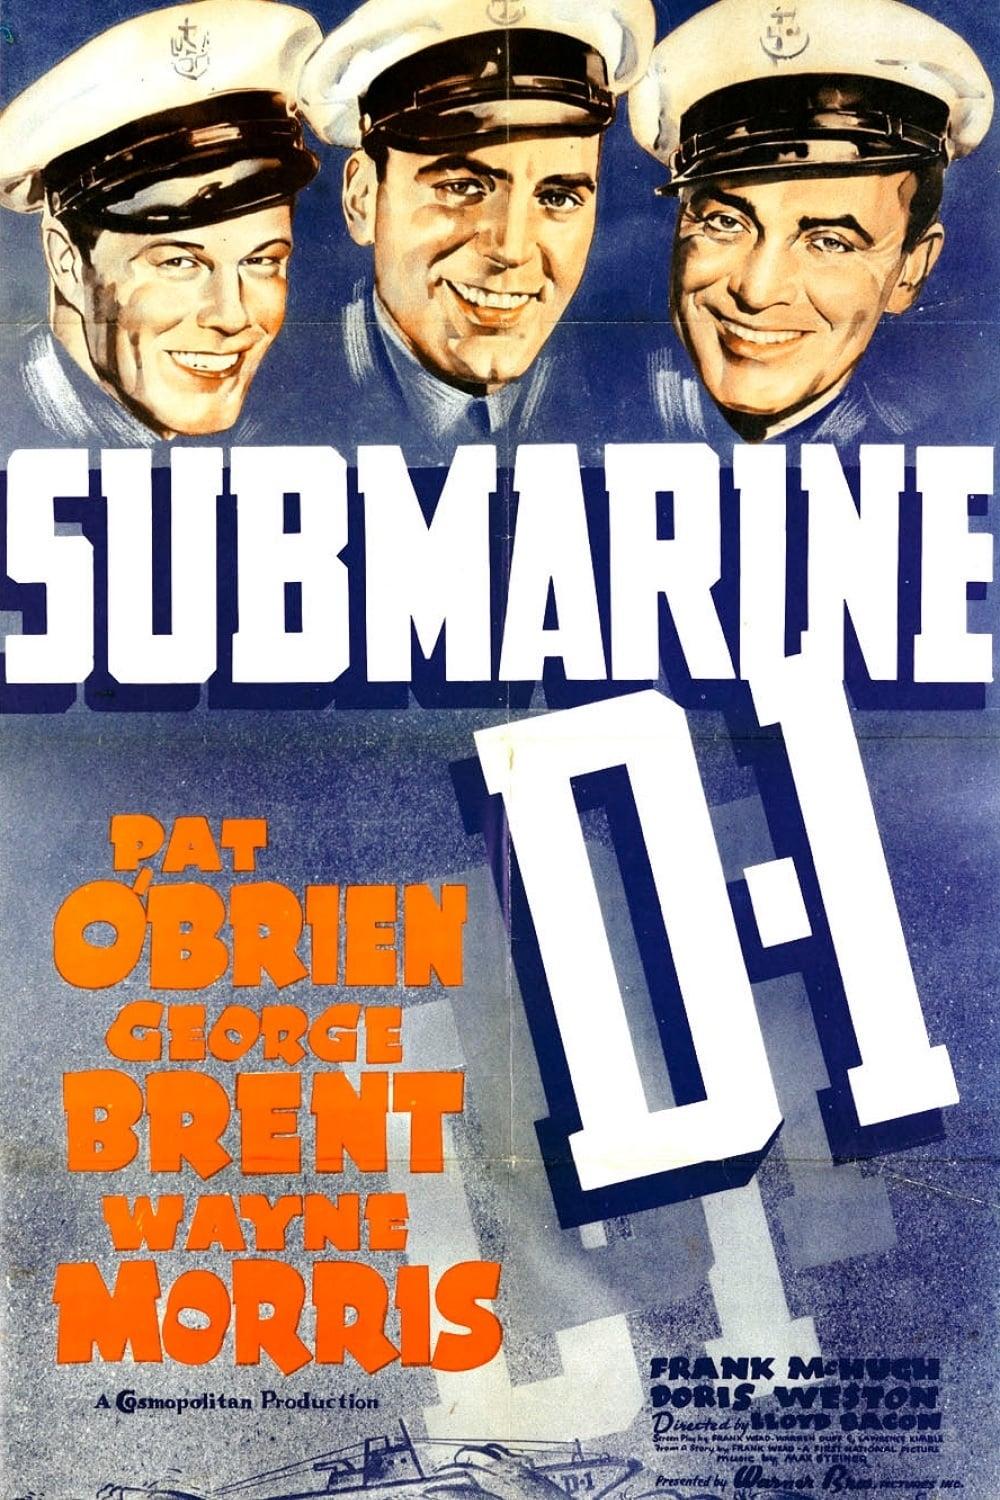 Submarine D-1 poster